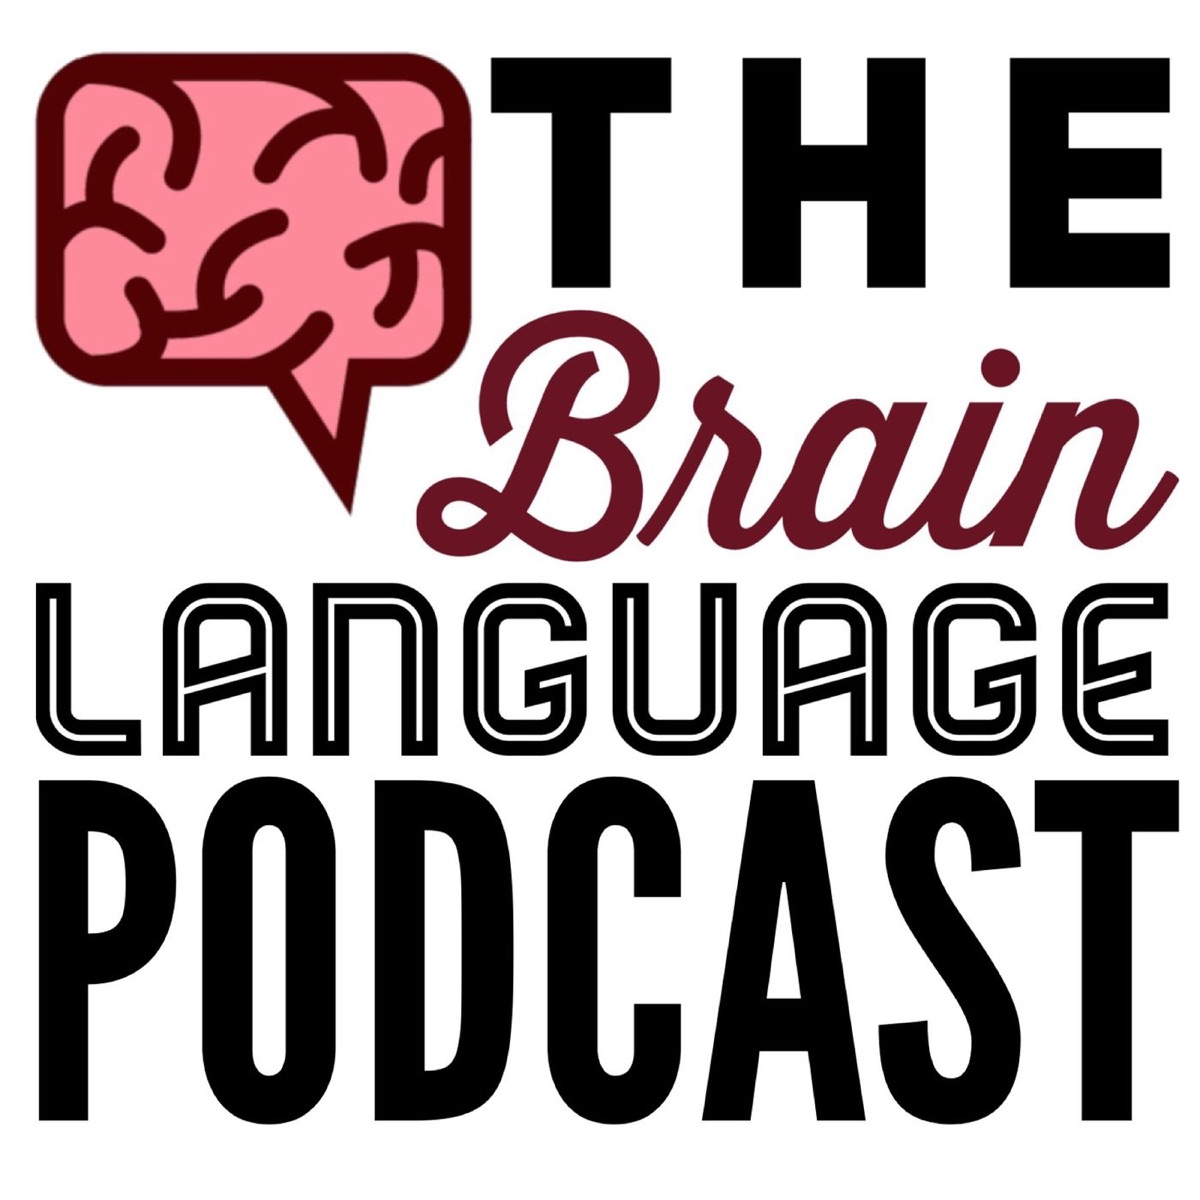 Brain languages. Because language подкаст. Brain and language.